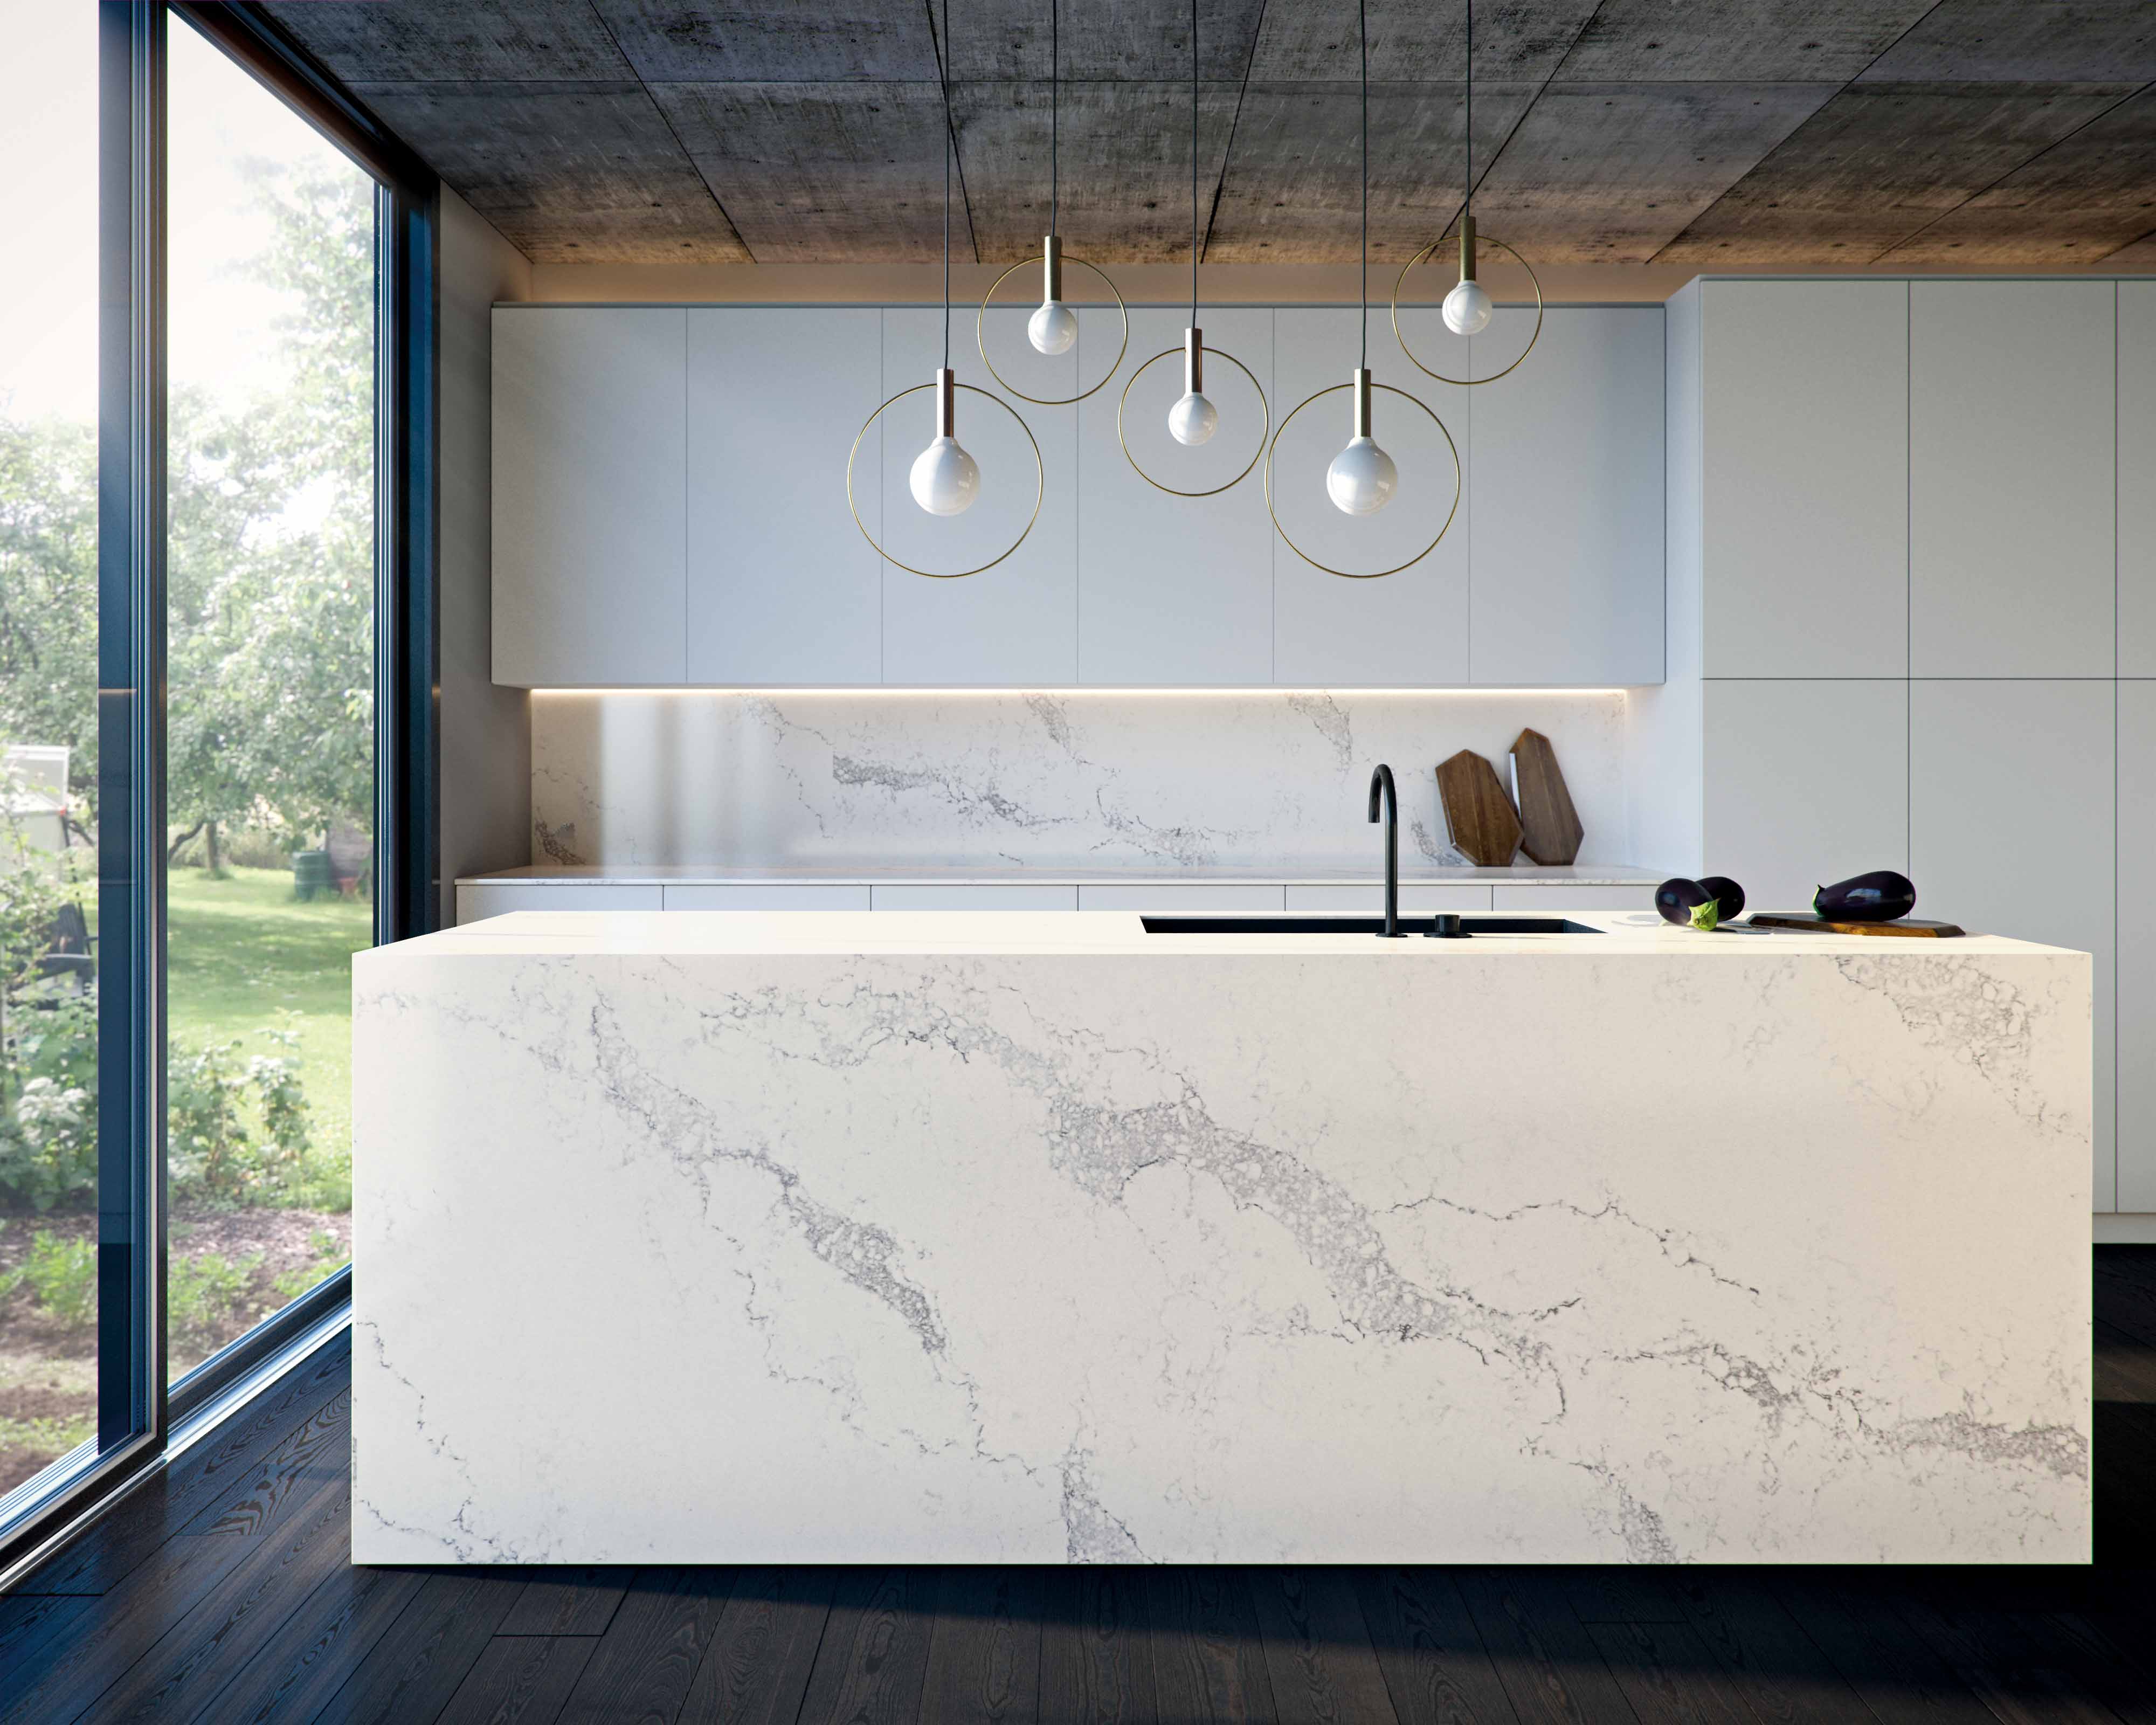 Contemporary design ideas for smaller kitchens